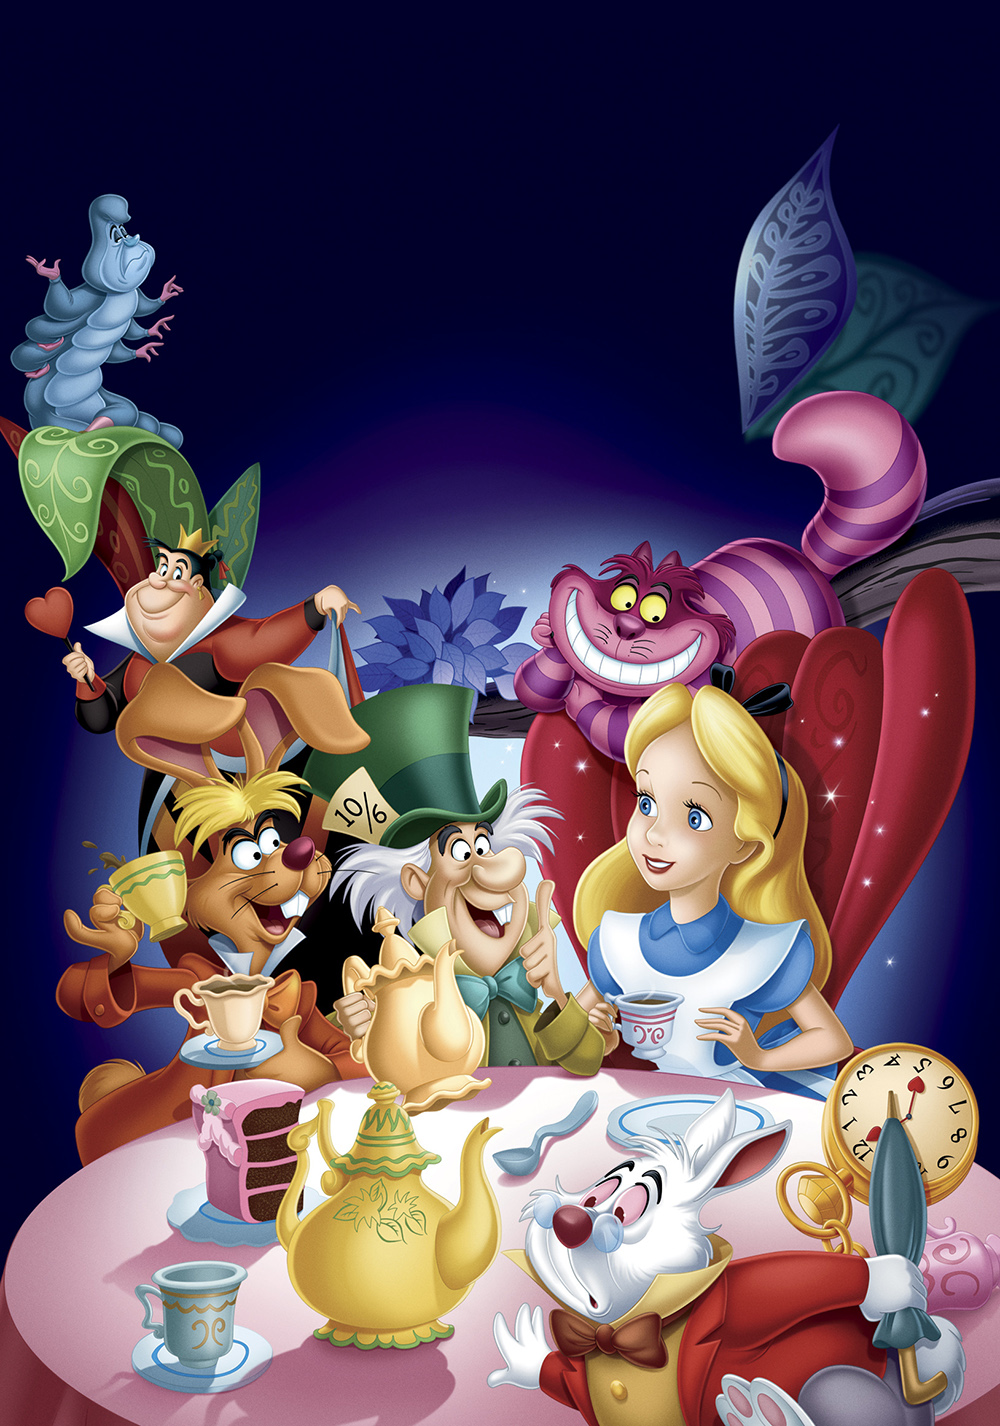 Alice in Wonderland (1951) Art